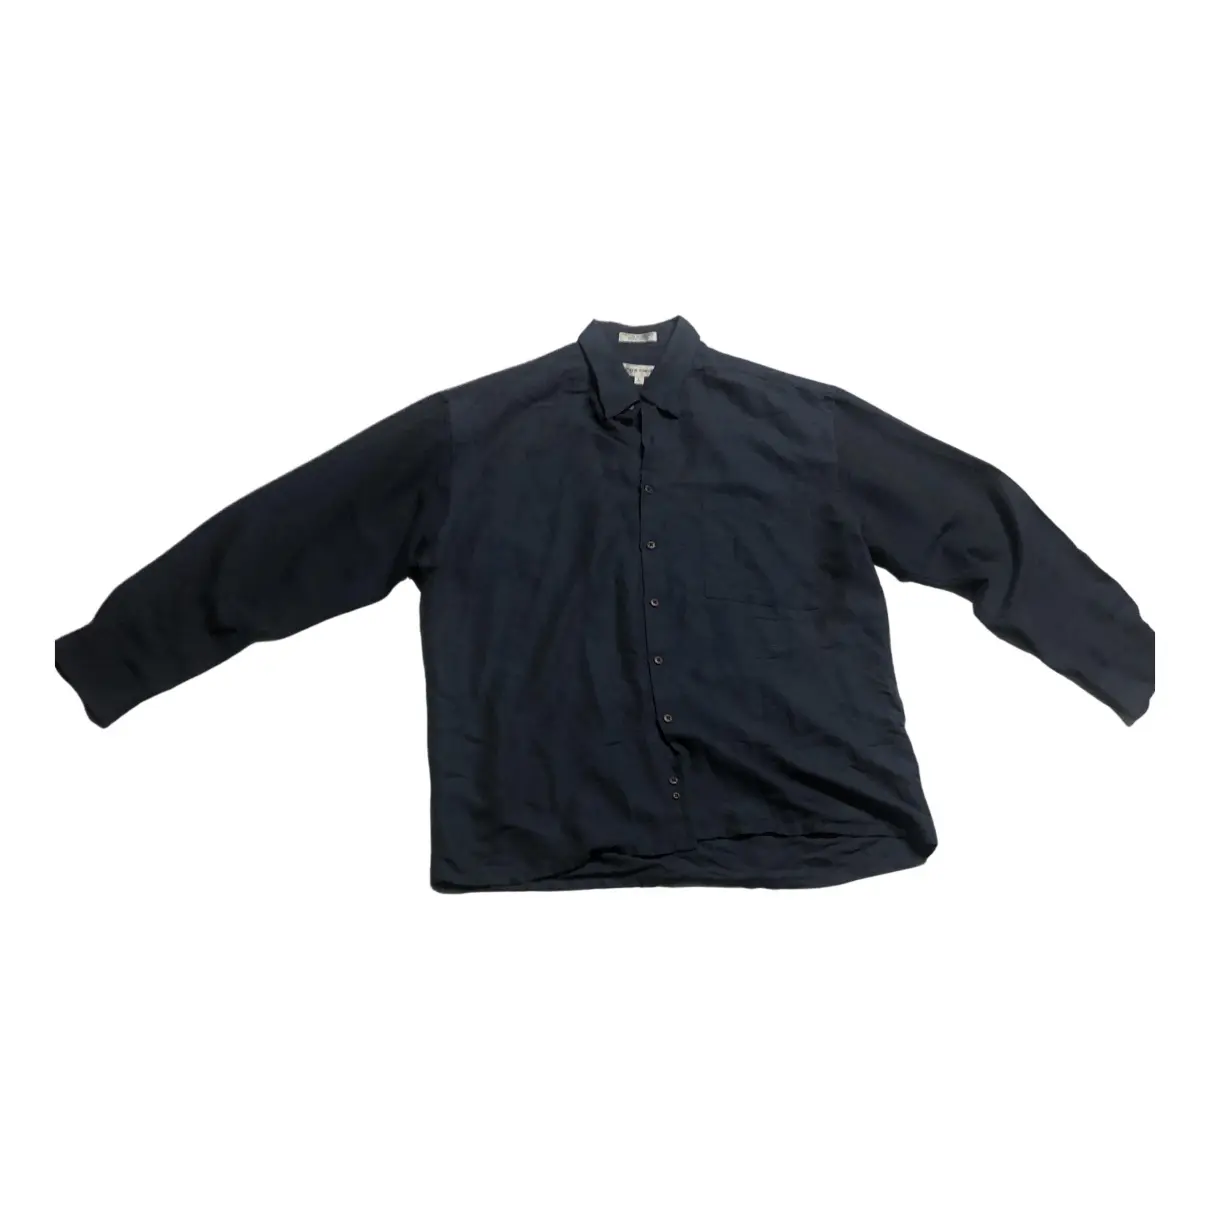 Linen shirt Pierre Cardin - Vintage